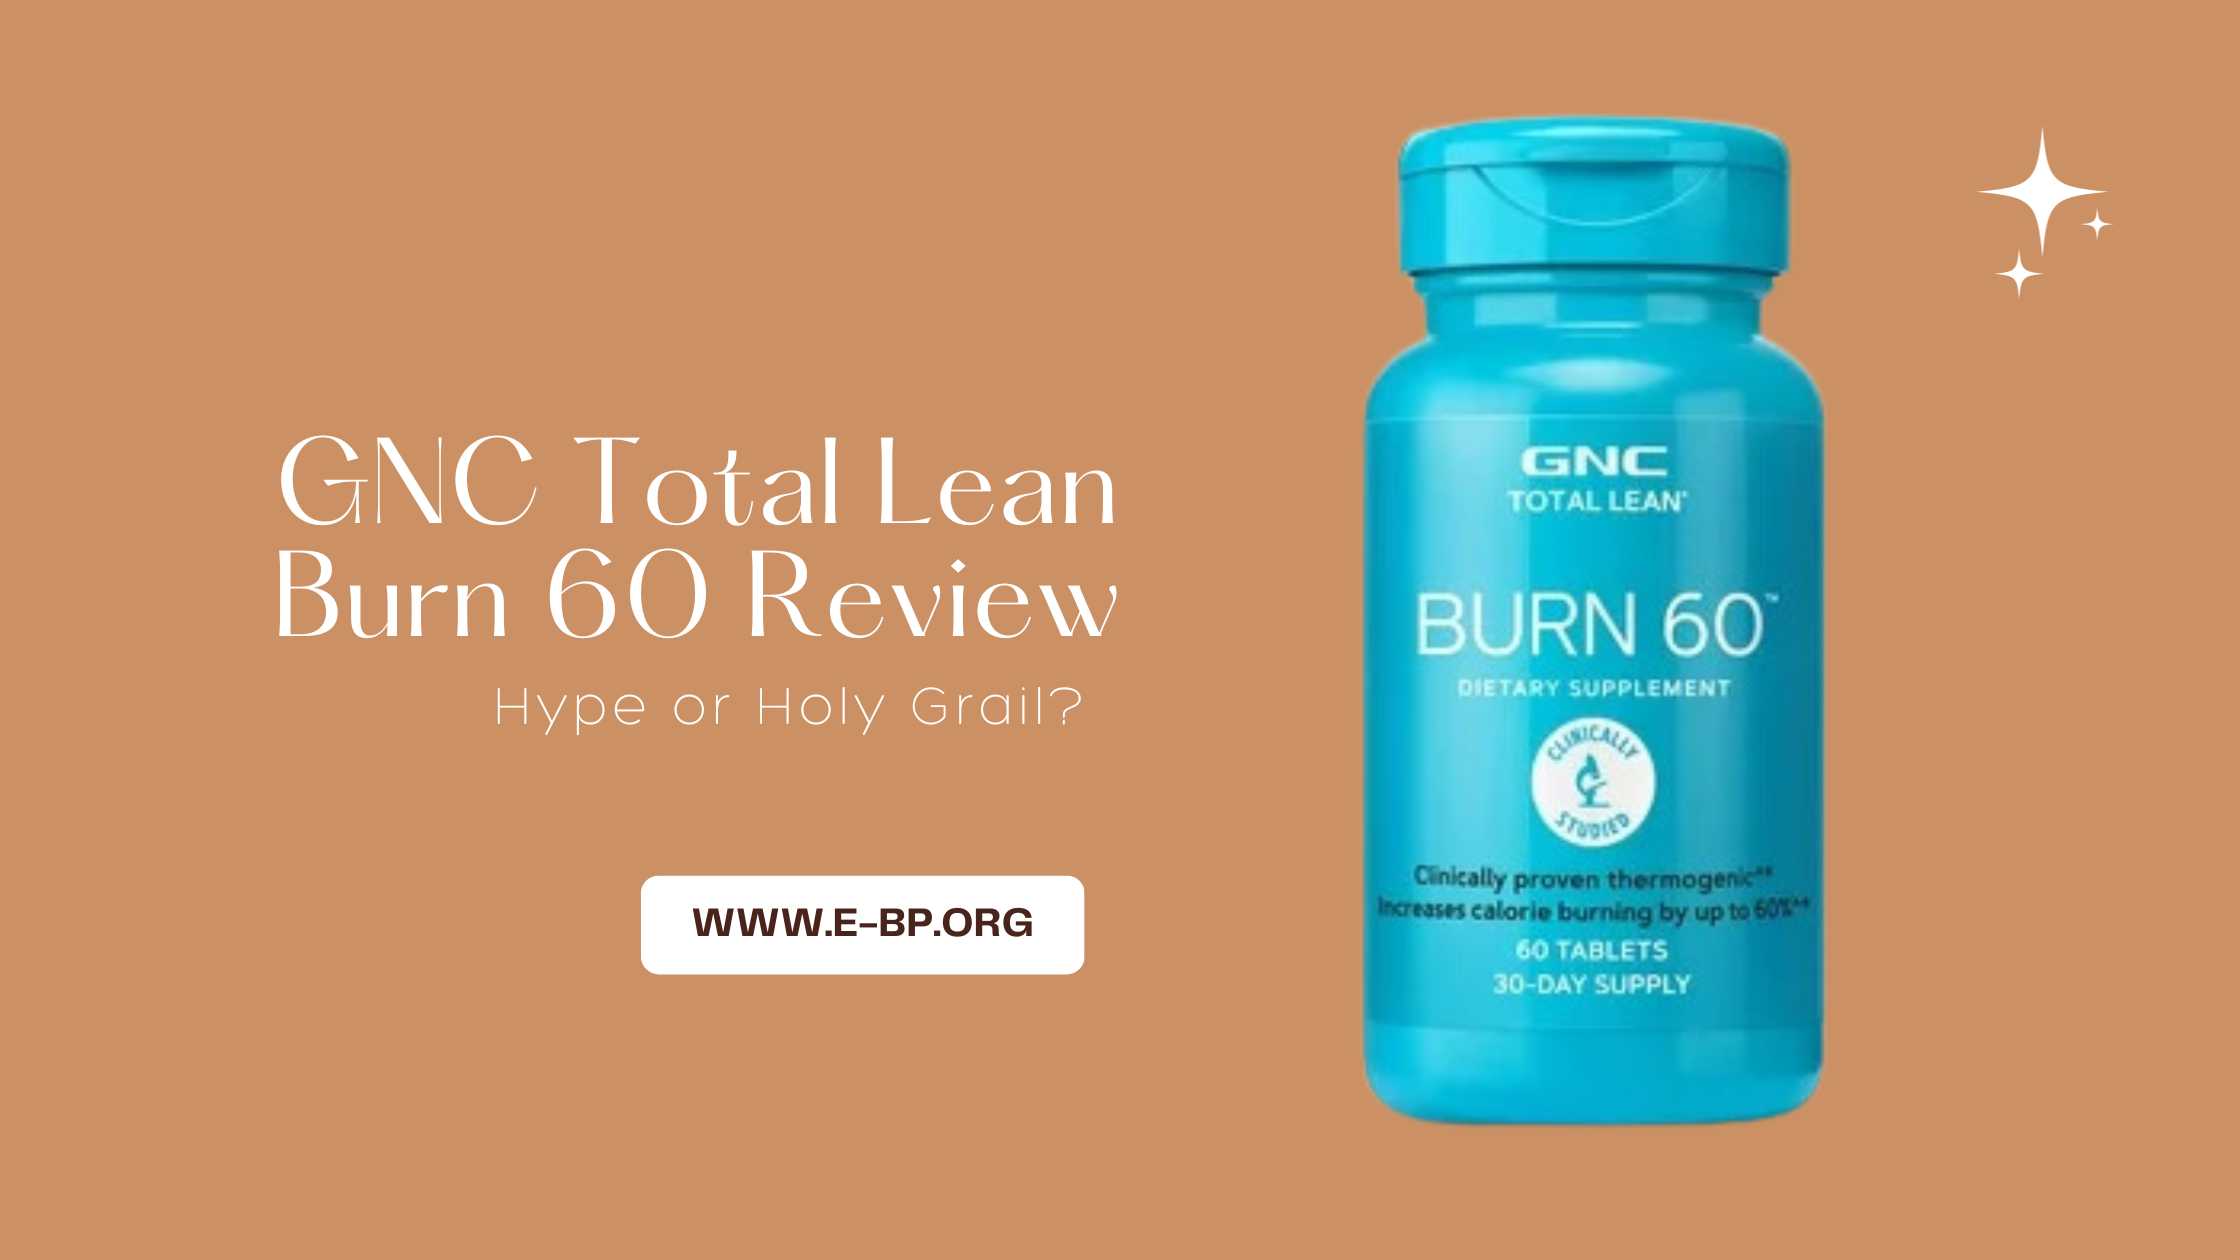 GNC Total Lean Burn 60 Review: Hype or Holy Grail?